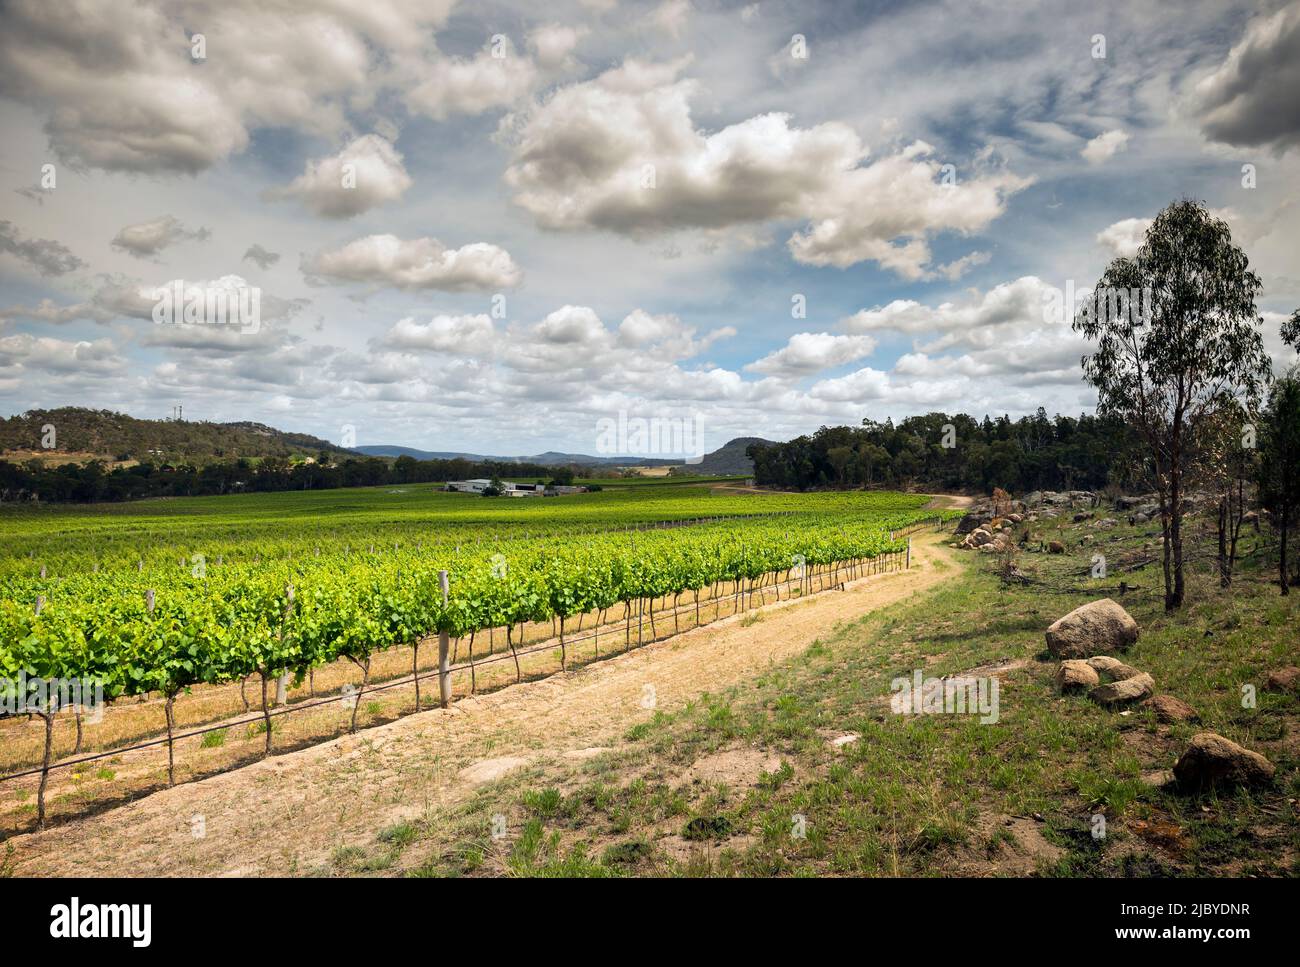 Looking across rows of grapes in vineyard at Ballandean - Granite Belt Stock Photo